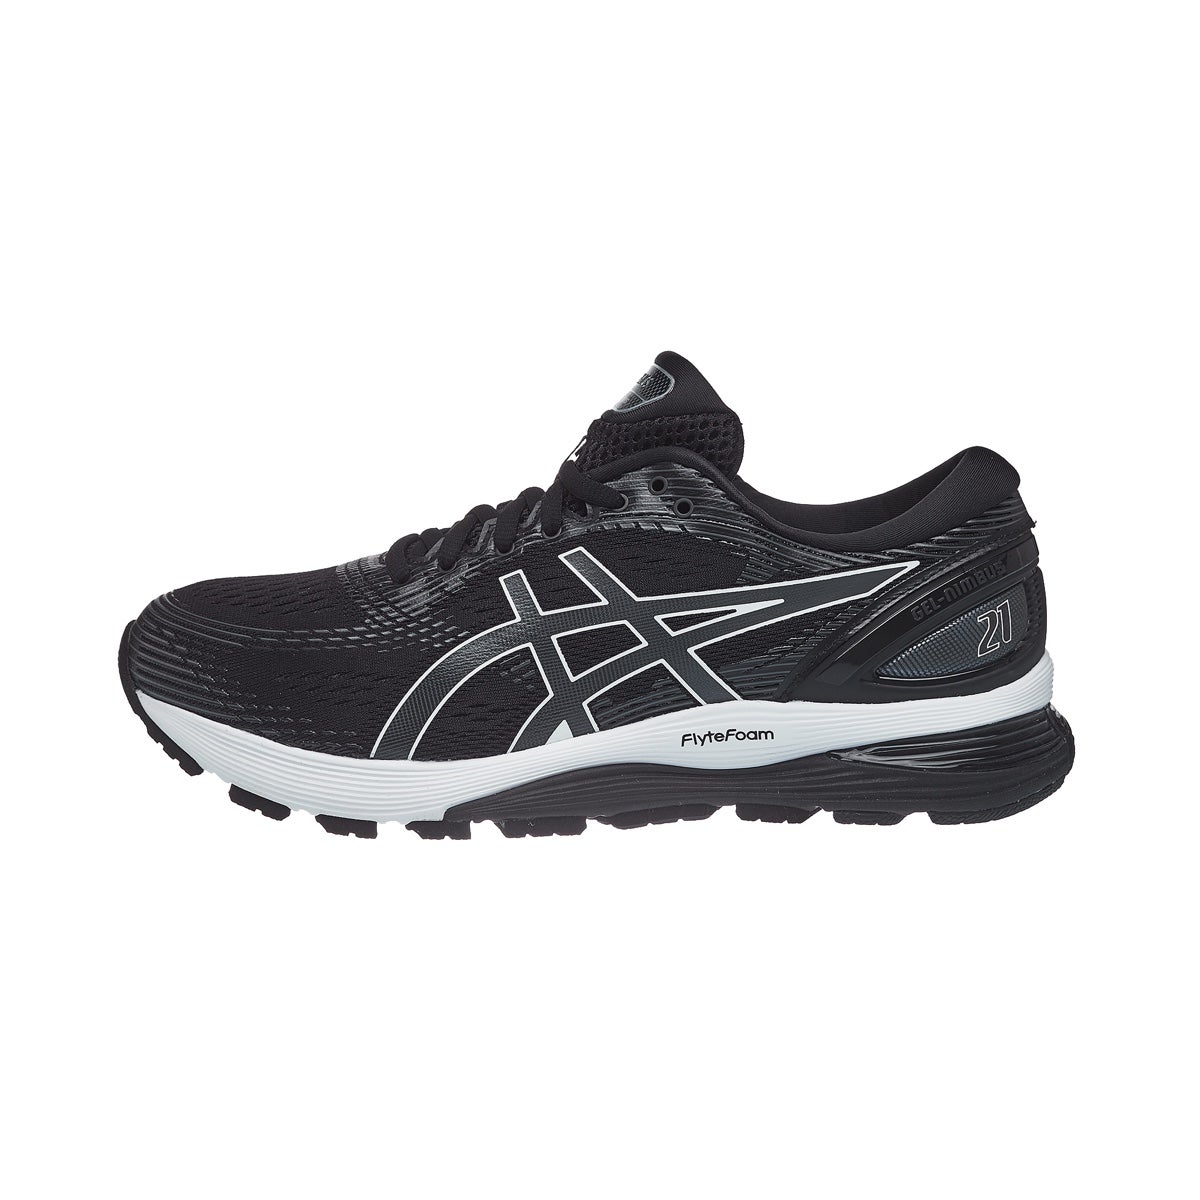 ASICS Gel Nimbus 21 Men's Shoes Black/Dark Grey 360° View | Running ...